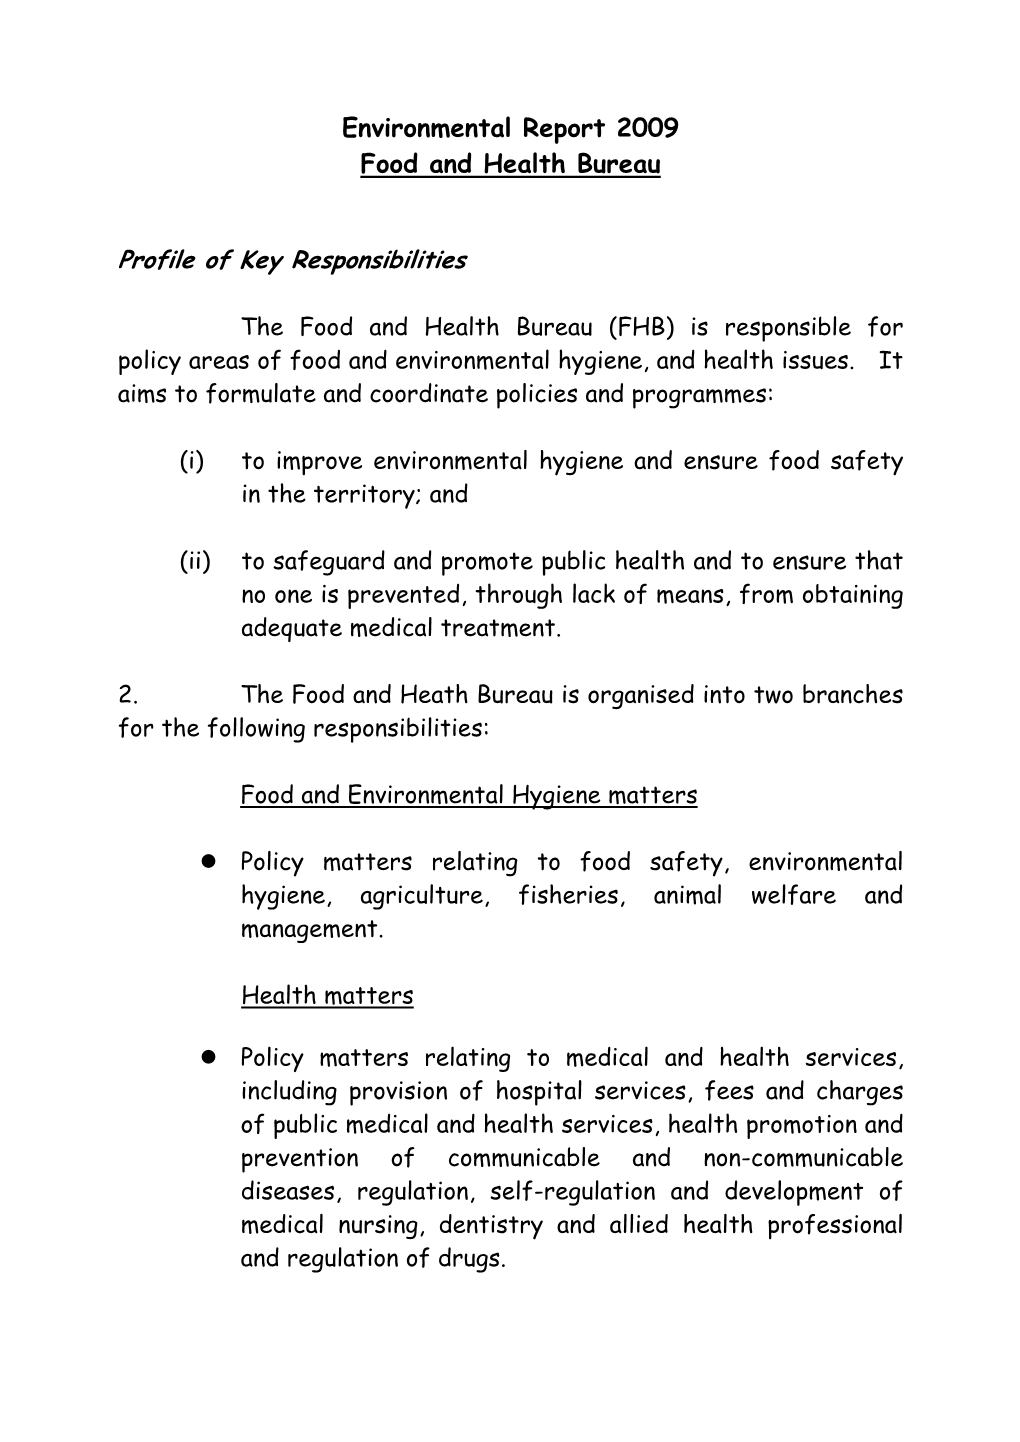 Environmental Report 2009 Food and Health Bureau Profile of Key Responsibilities